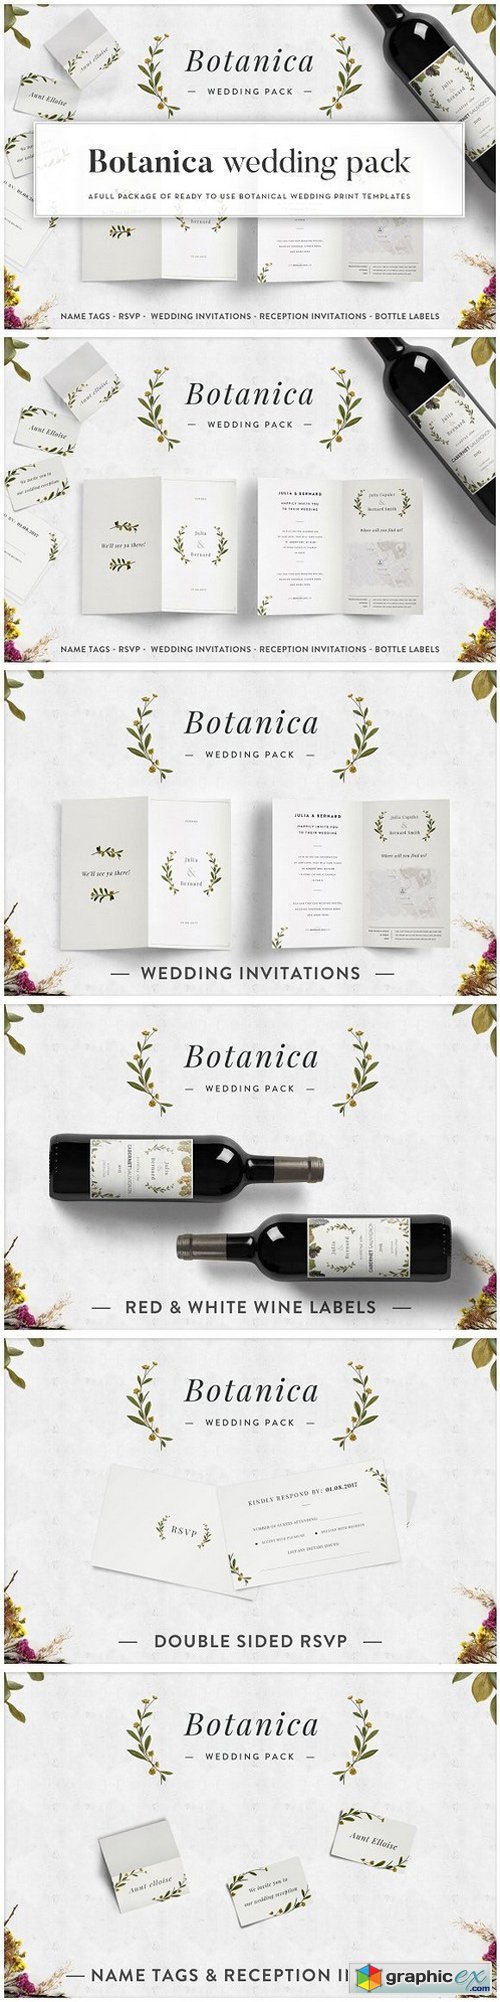 Botanica - Wedding Pack [print]